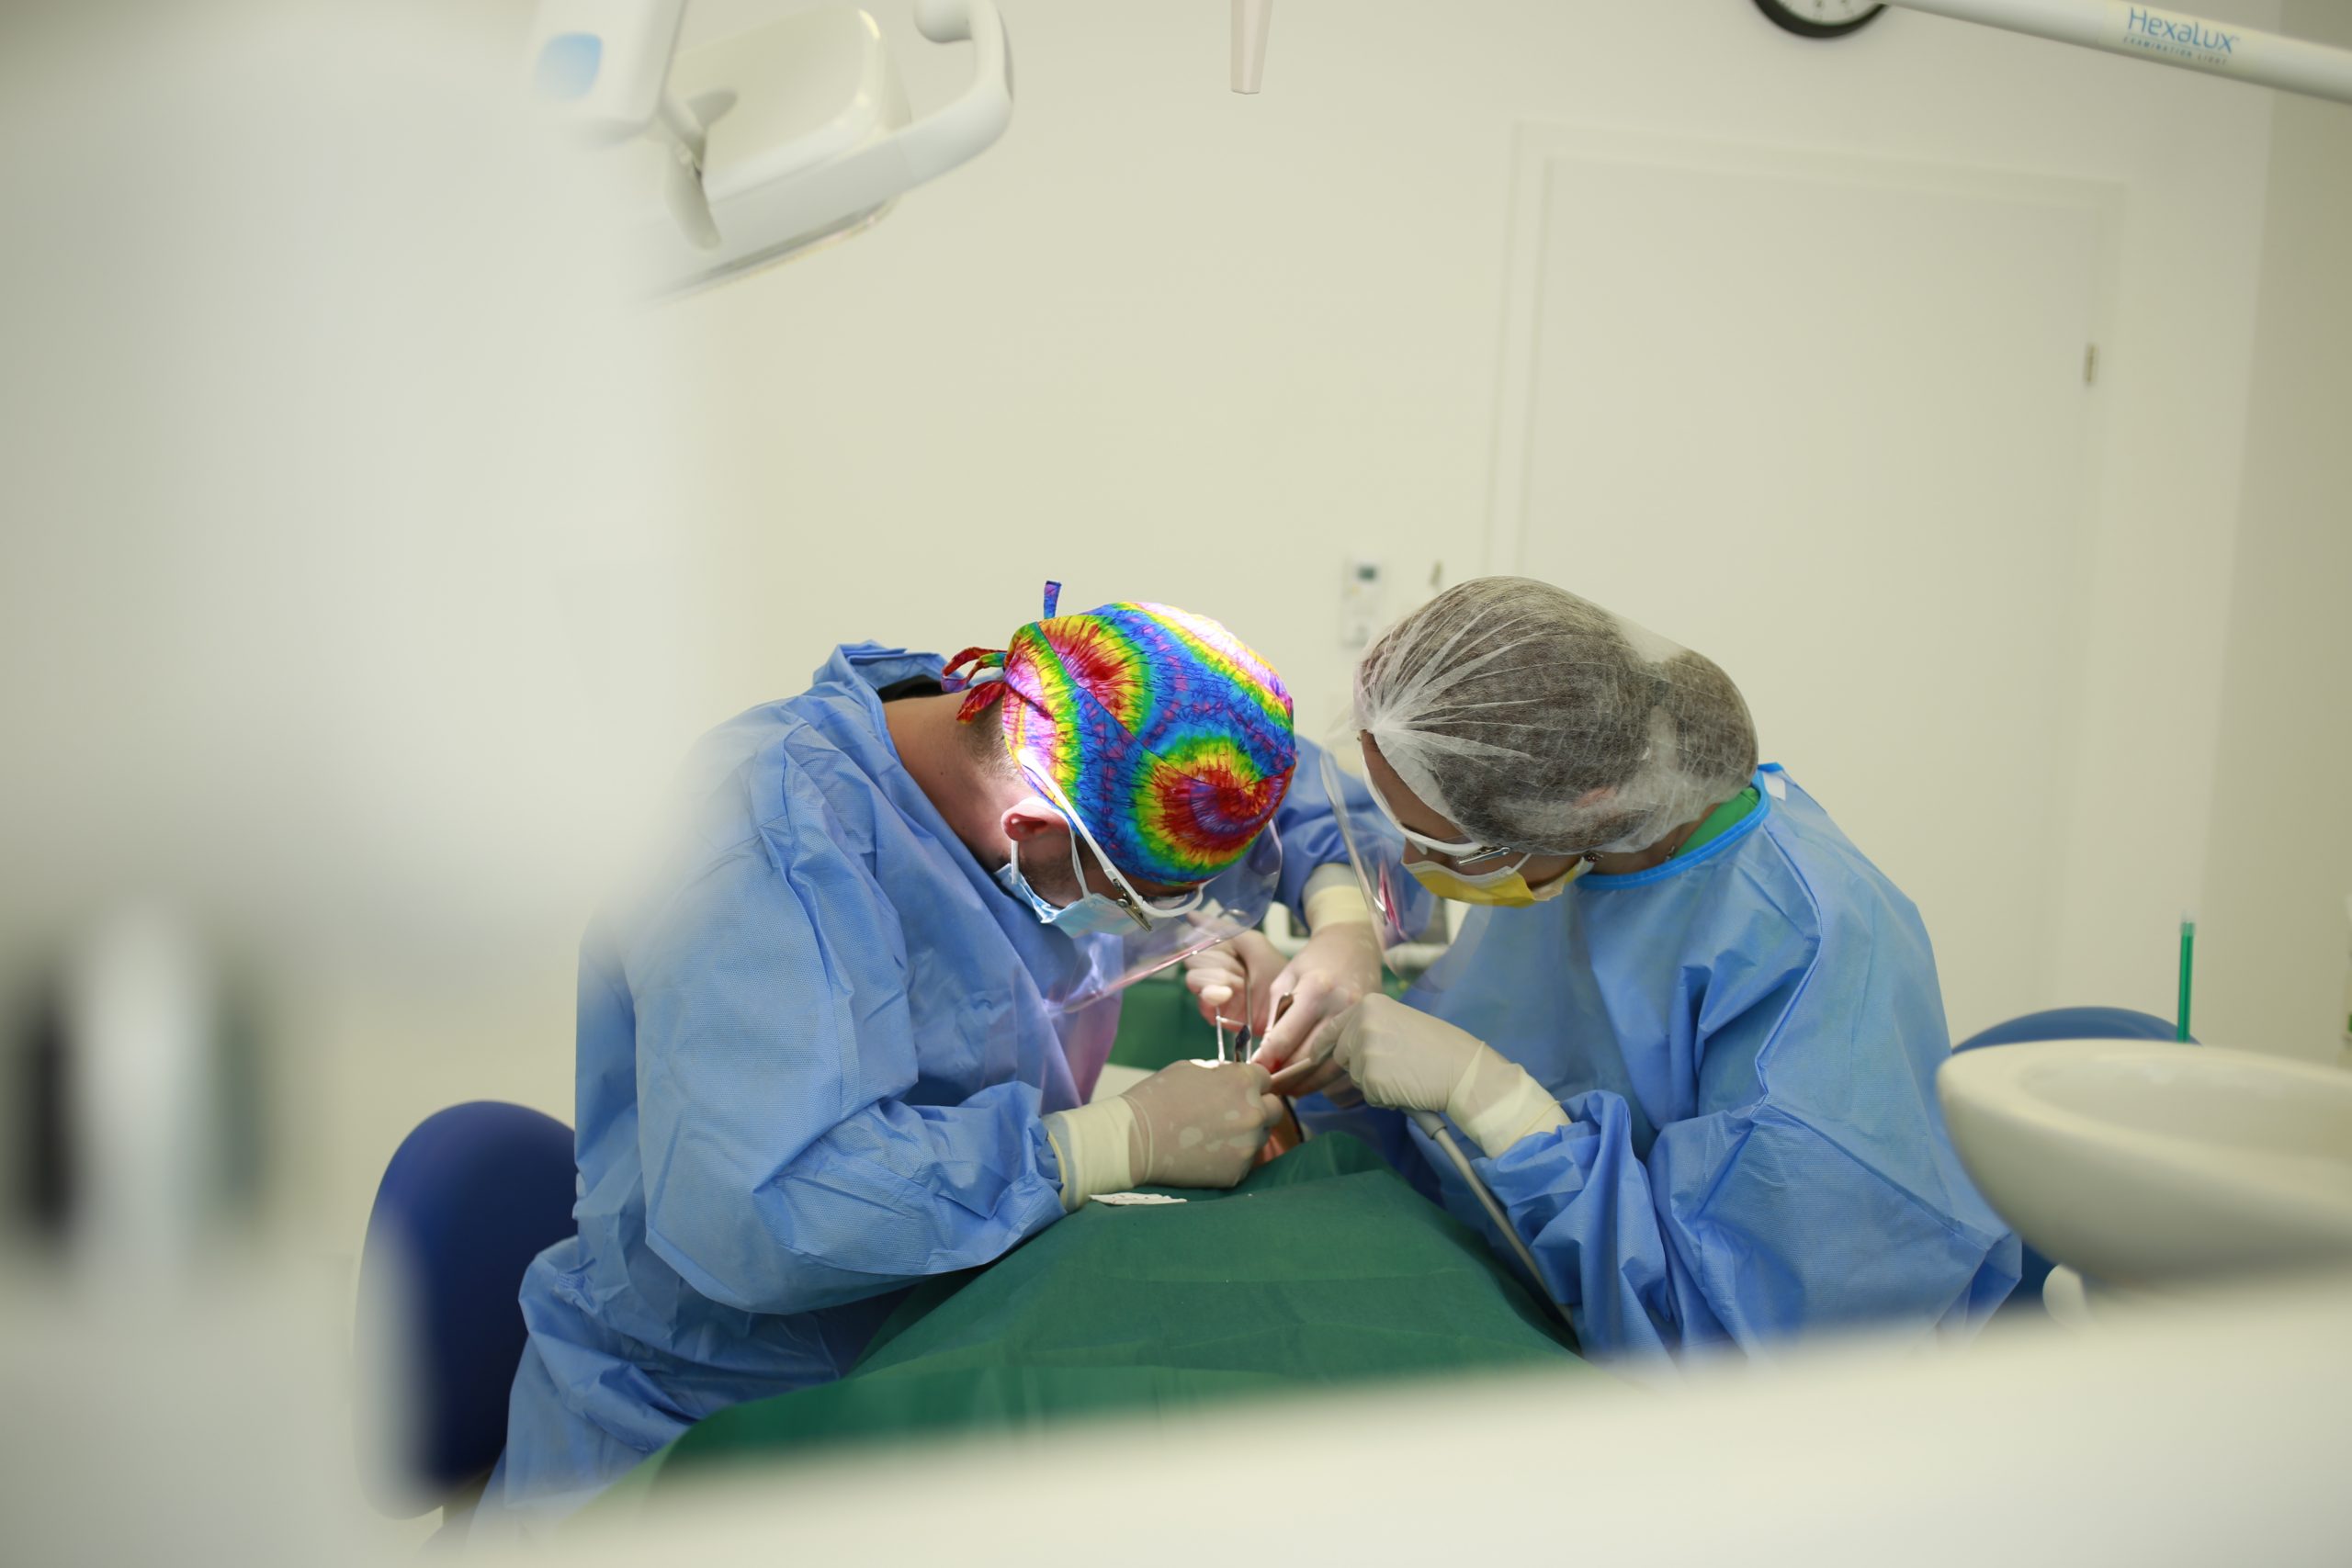 interventie chirurgicala cu implant dentar inserat de medic in stanga si asistent in dreapta 